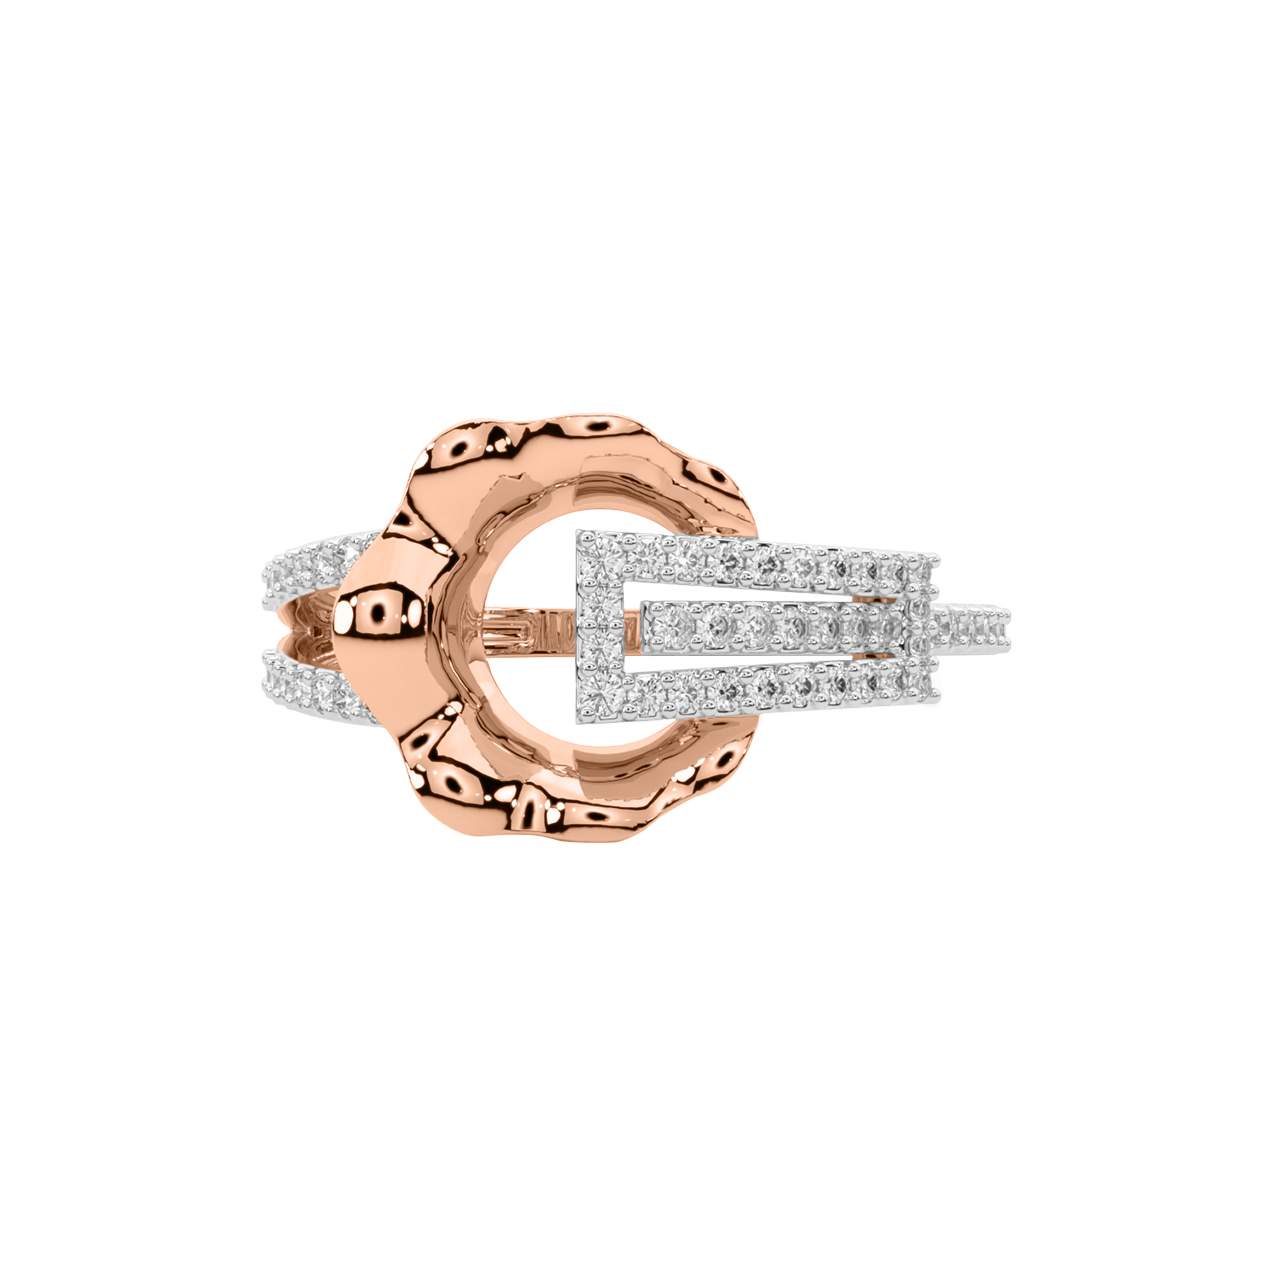 Galvin Round Diamond Engagement Ring